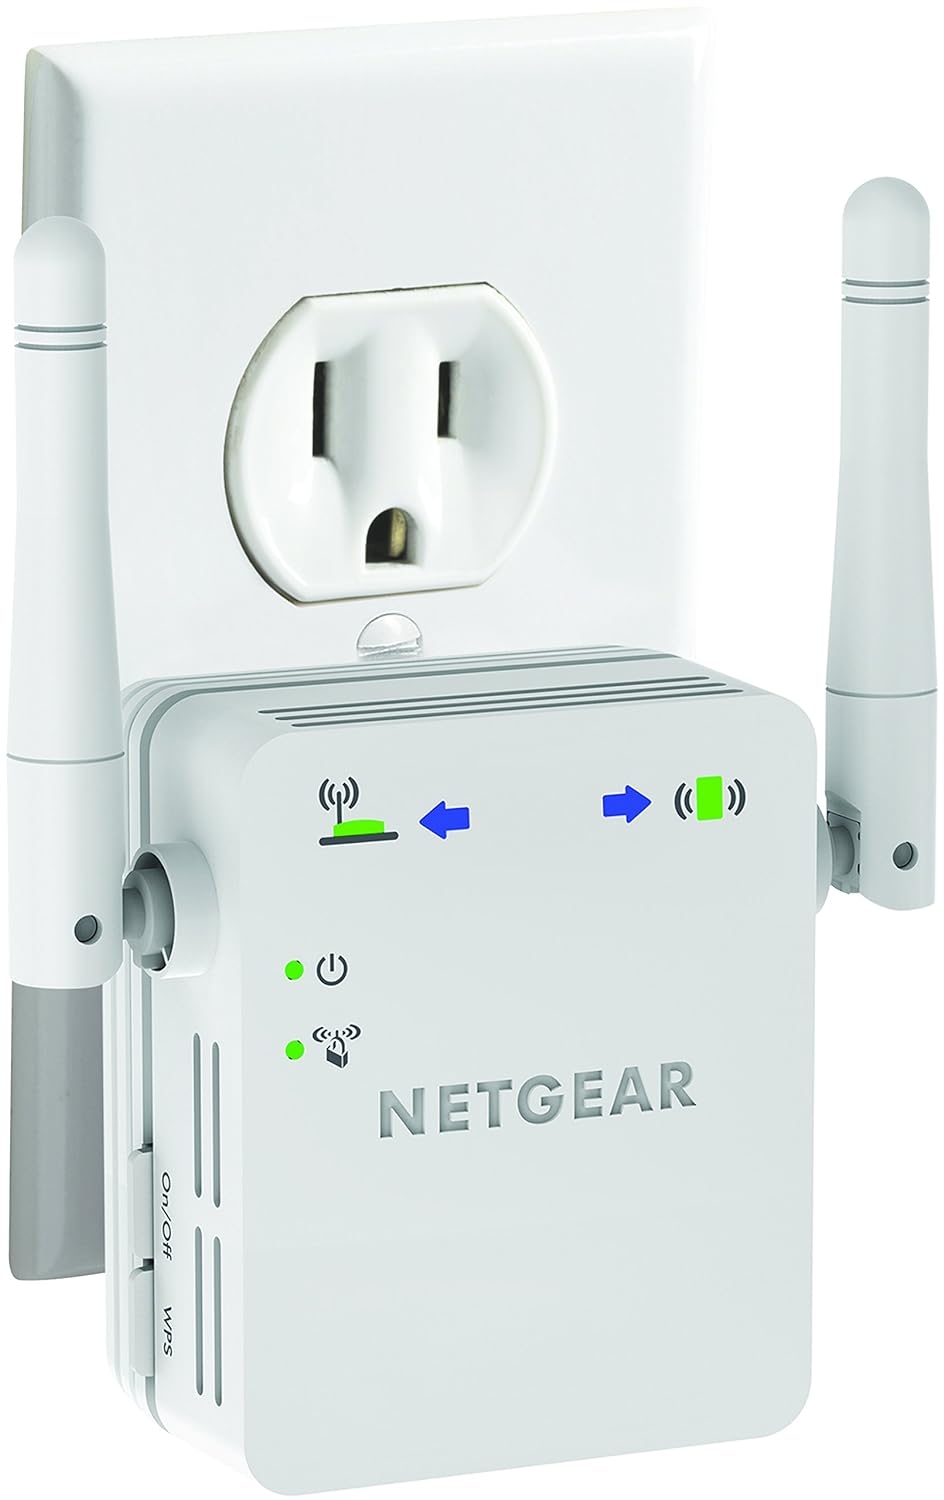 NETGEAR - Universal Wi-Fi Range Extender with Ethernet Port